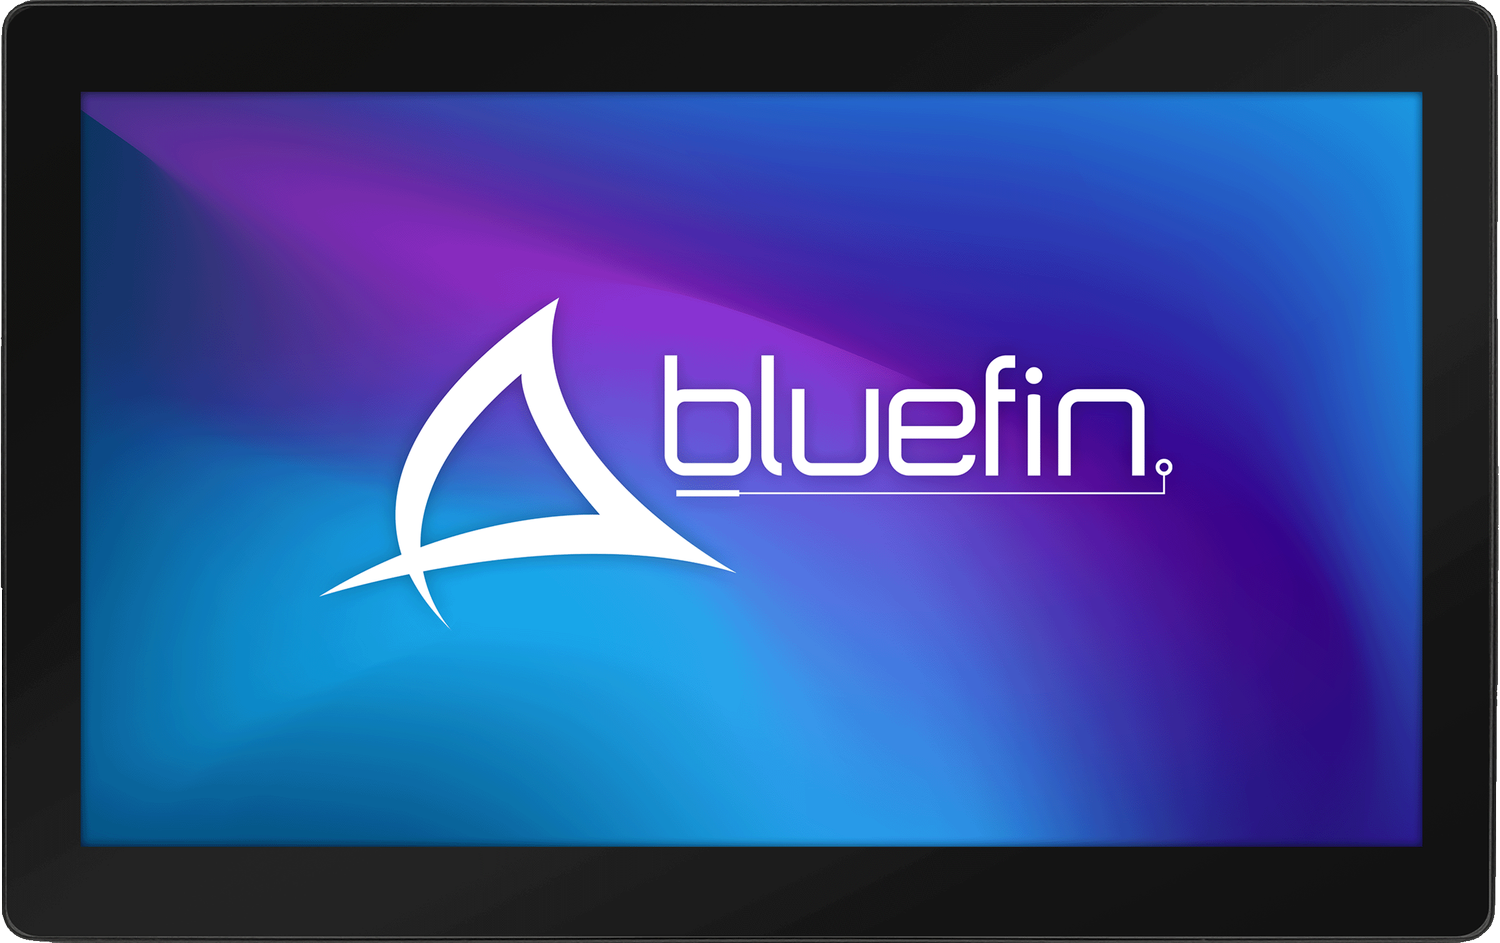 Bluefin - 32.0